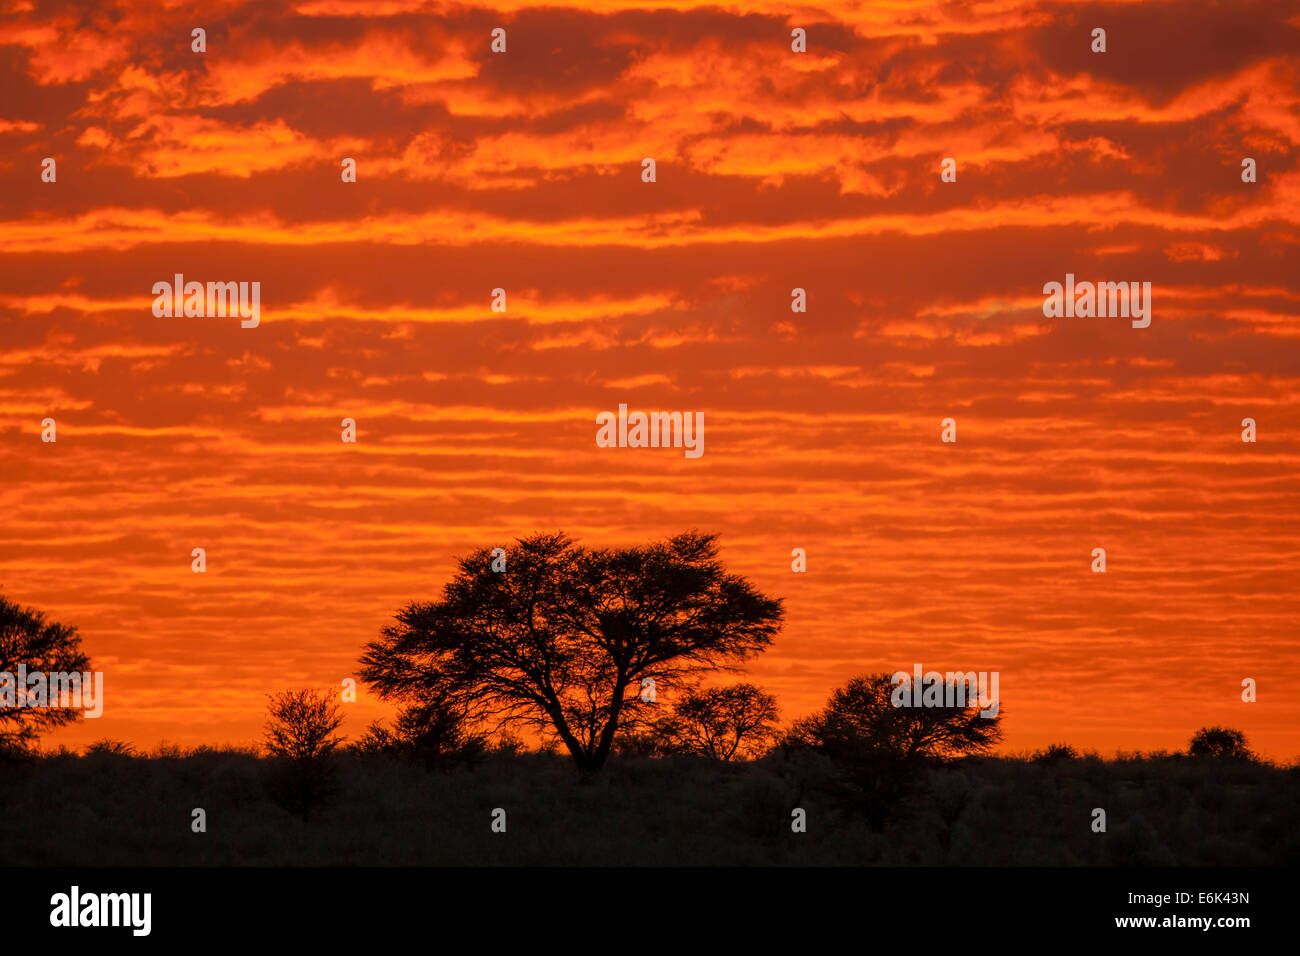 Glowing red clouds at sunset, Mata Mata, Kgalagadi Transfrontier Park, South Africa Stock Photo